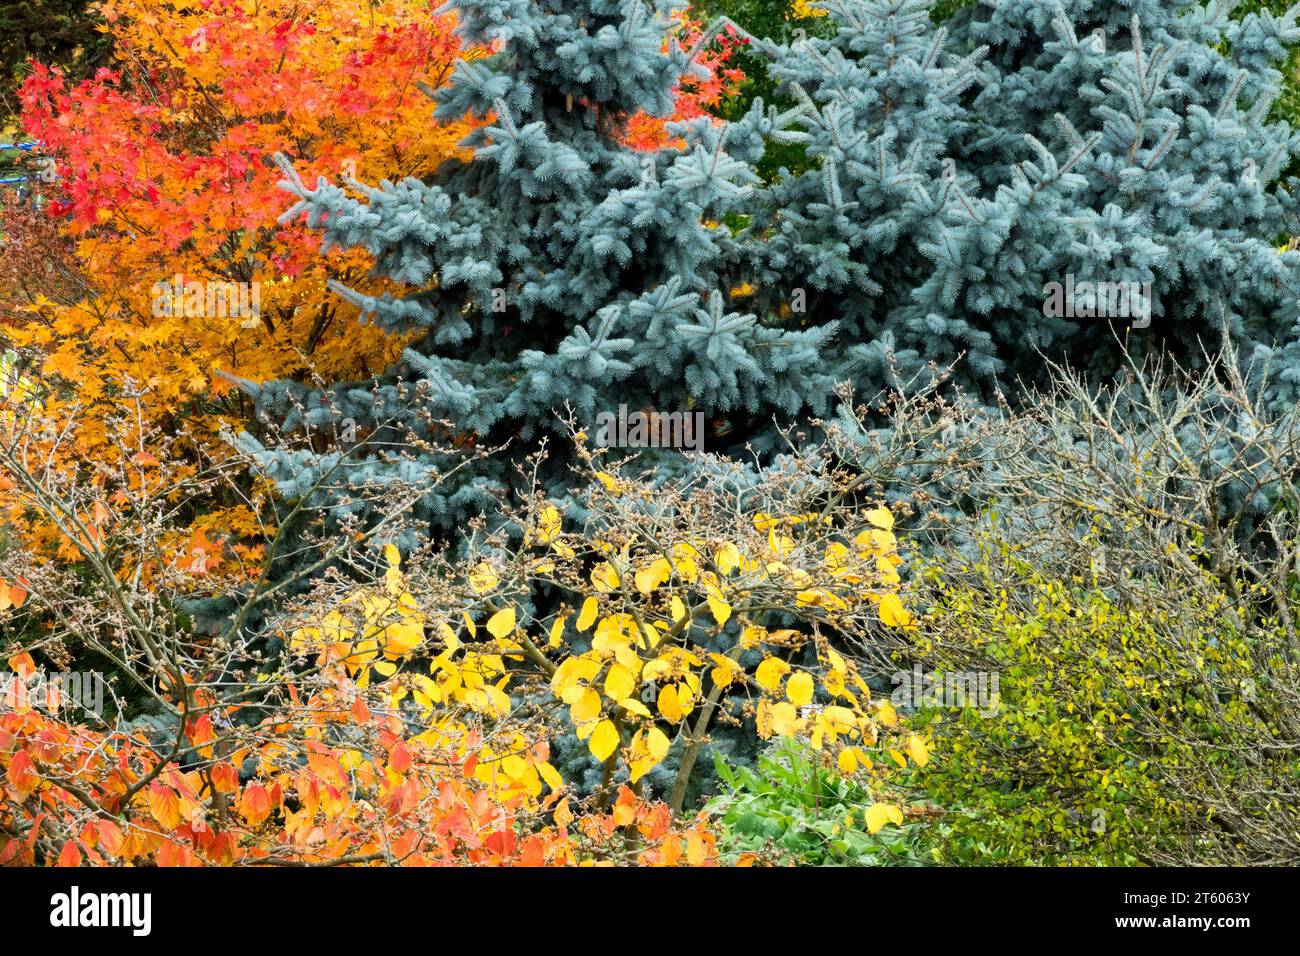 Autumn, Colour, Garden, border, Colourful, Acer palmatum, Picea pungens, Witch hazel, Season, Foliage Stock Photo